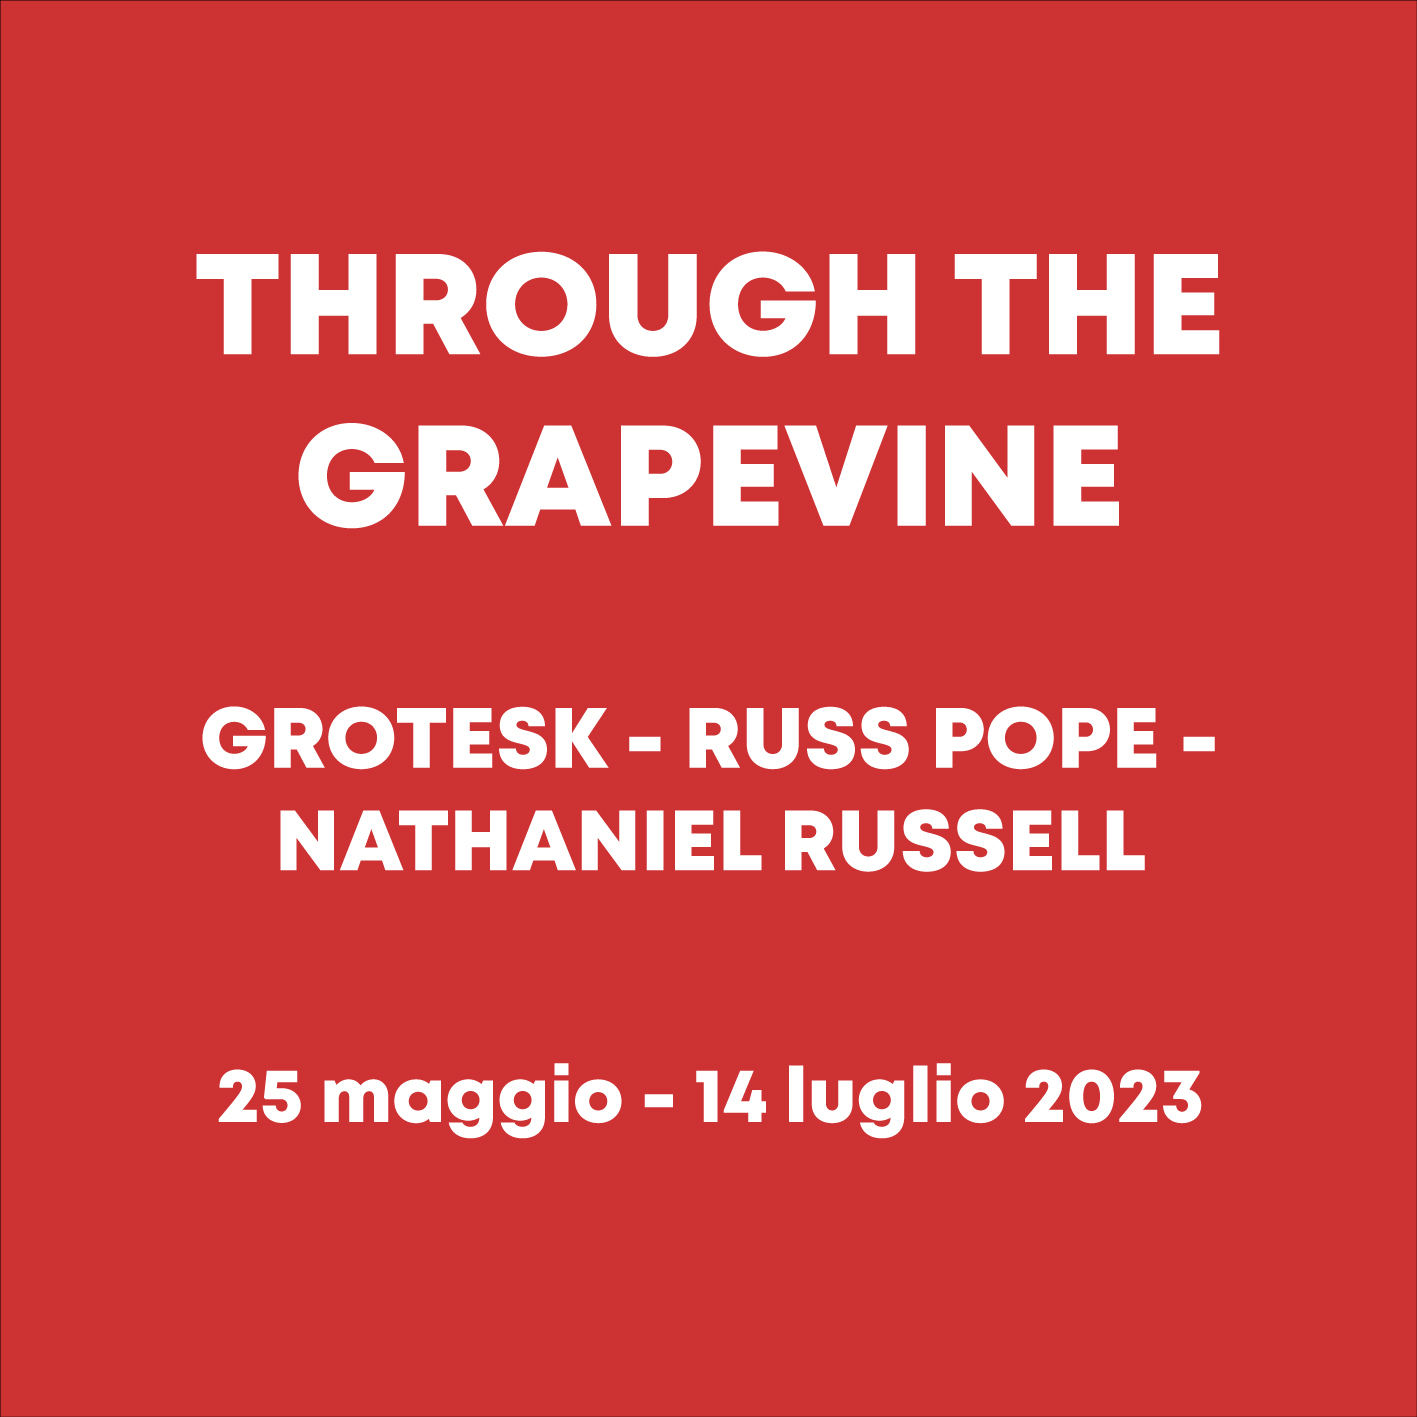 Through-the-Grapevine_1